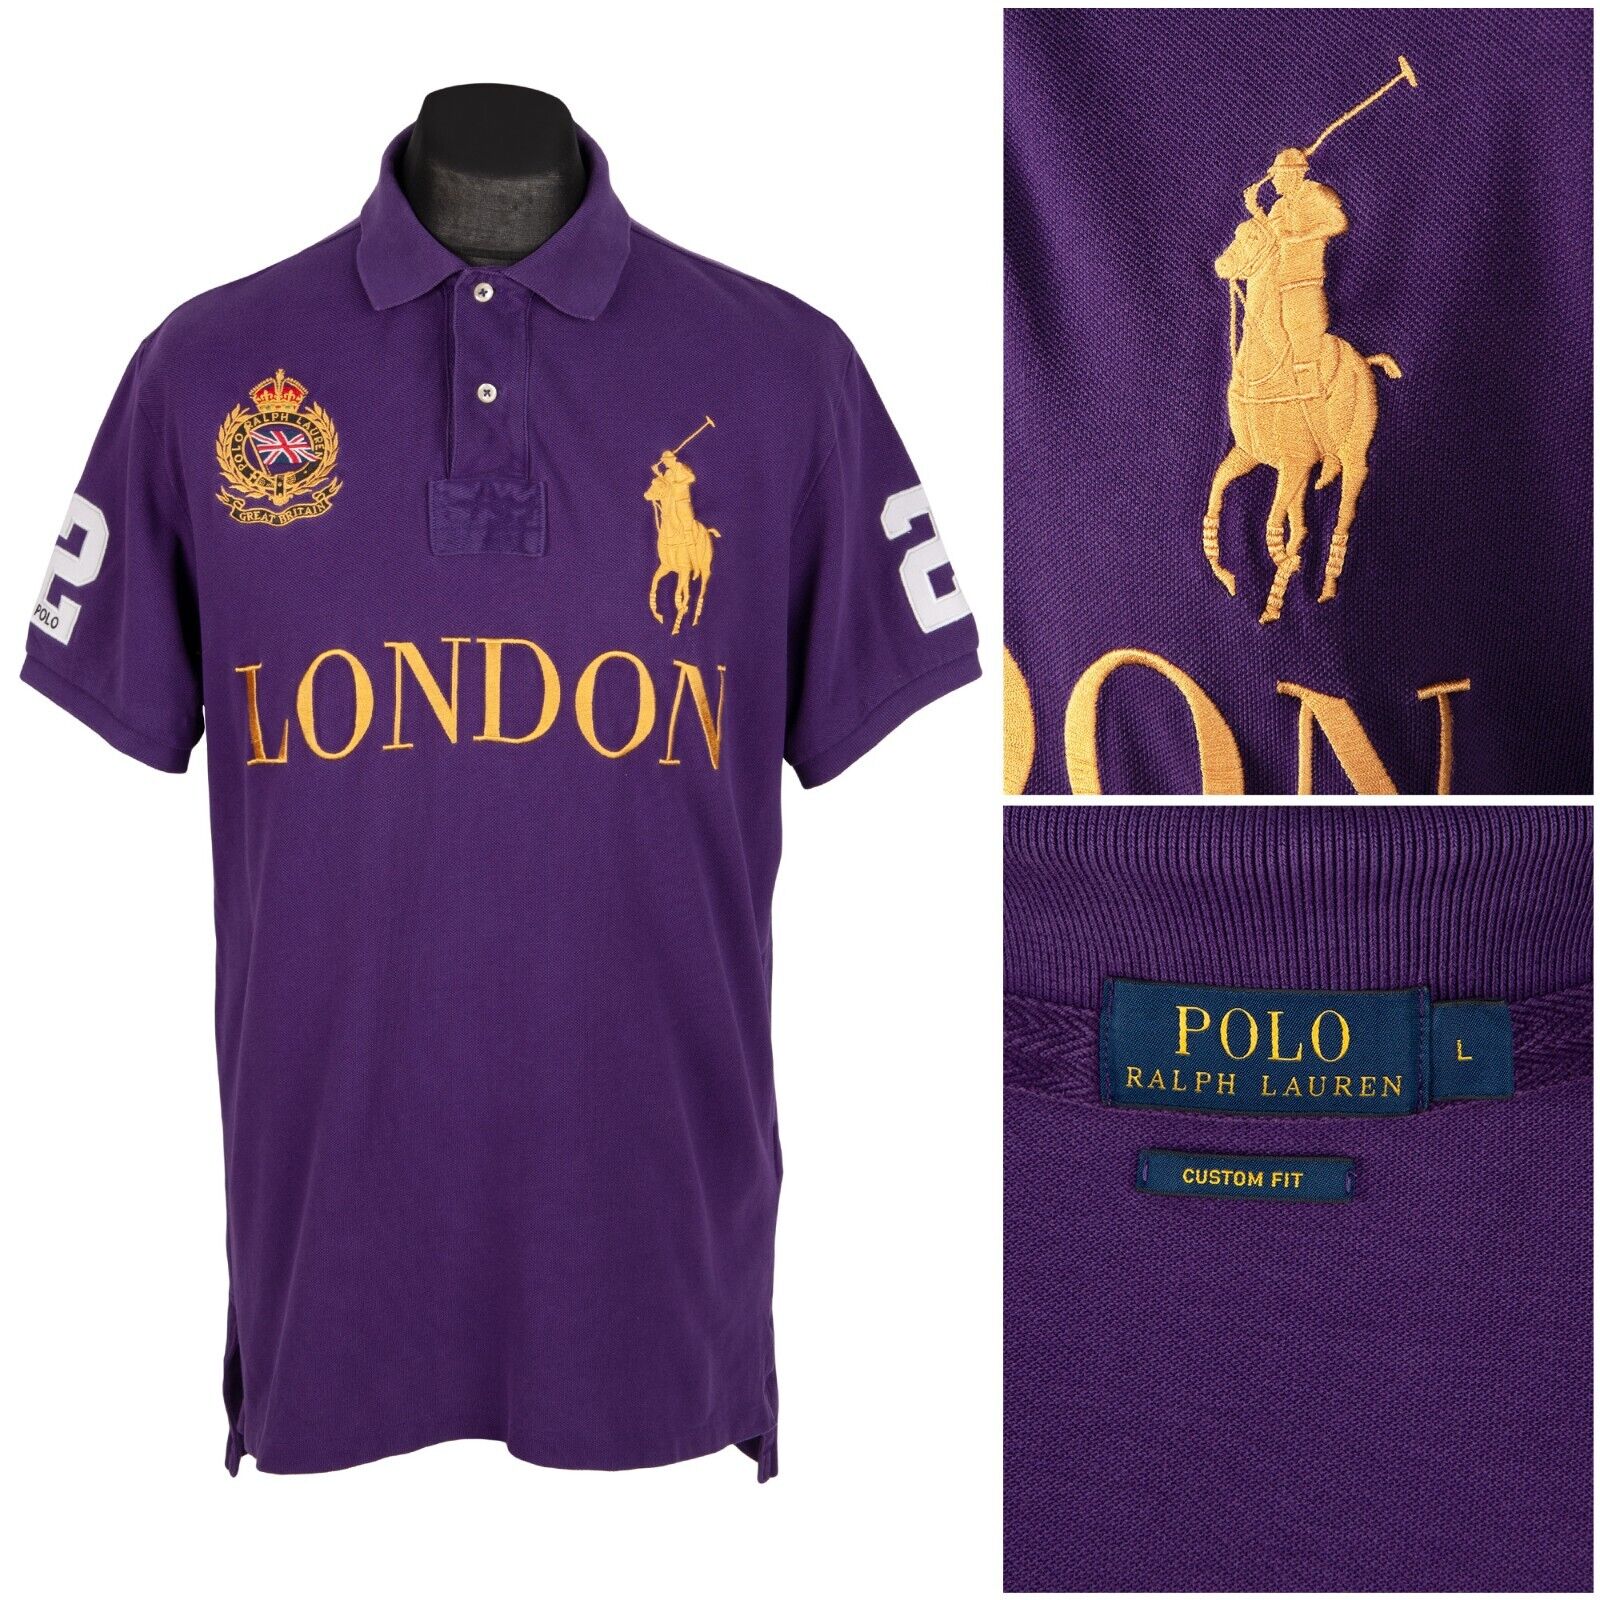 POLO RALPH LAUREN London Polo Shirt Purple Cotton Mens Big Pony Spell